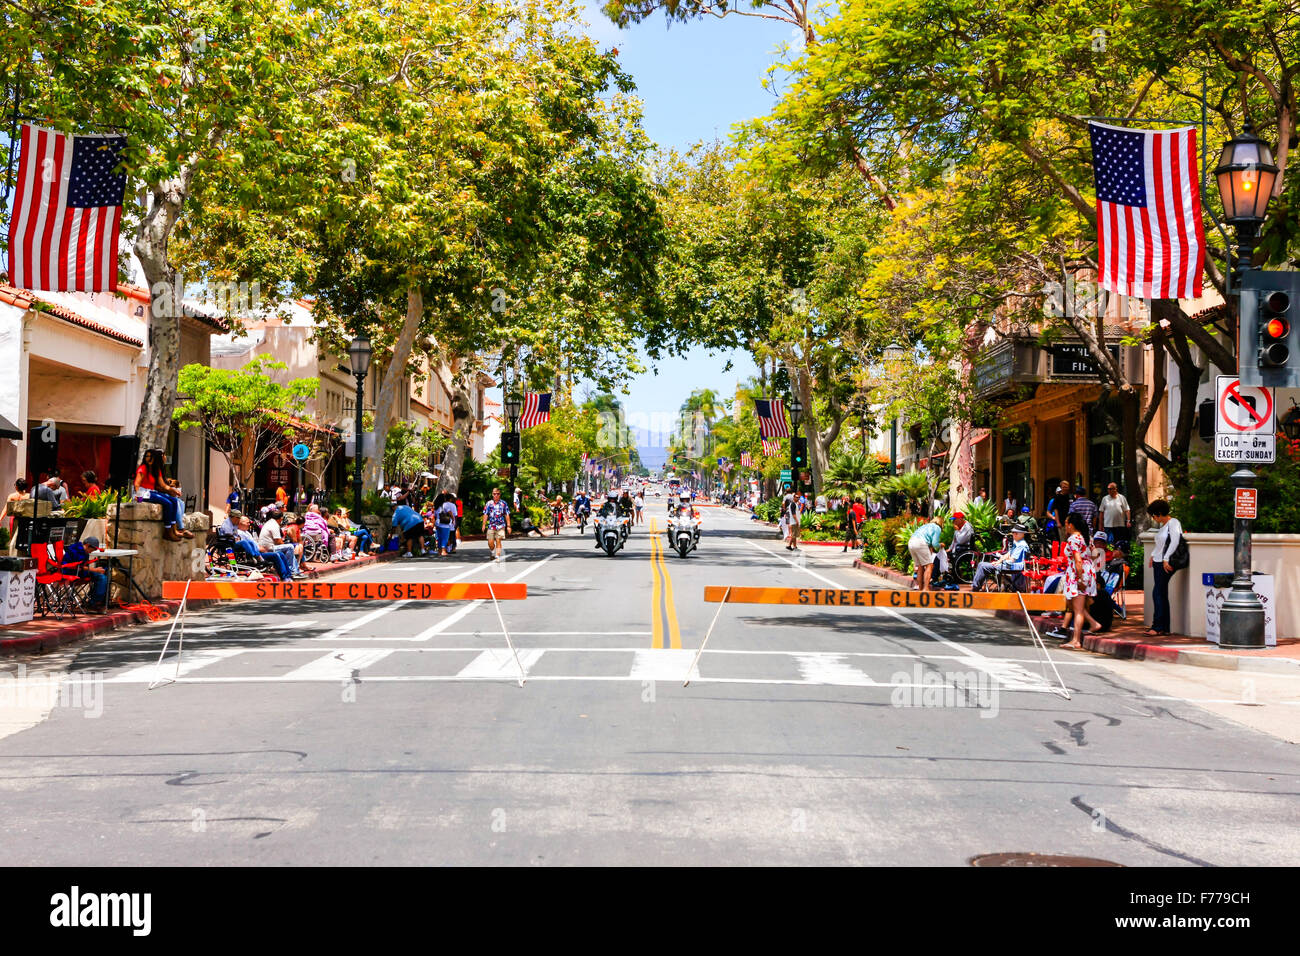 July 4th parade on State Street in Santa Barbara California Stock Photo